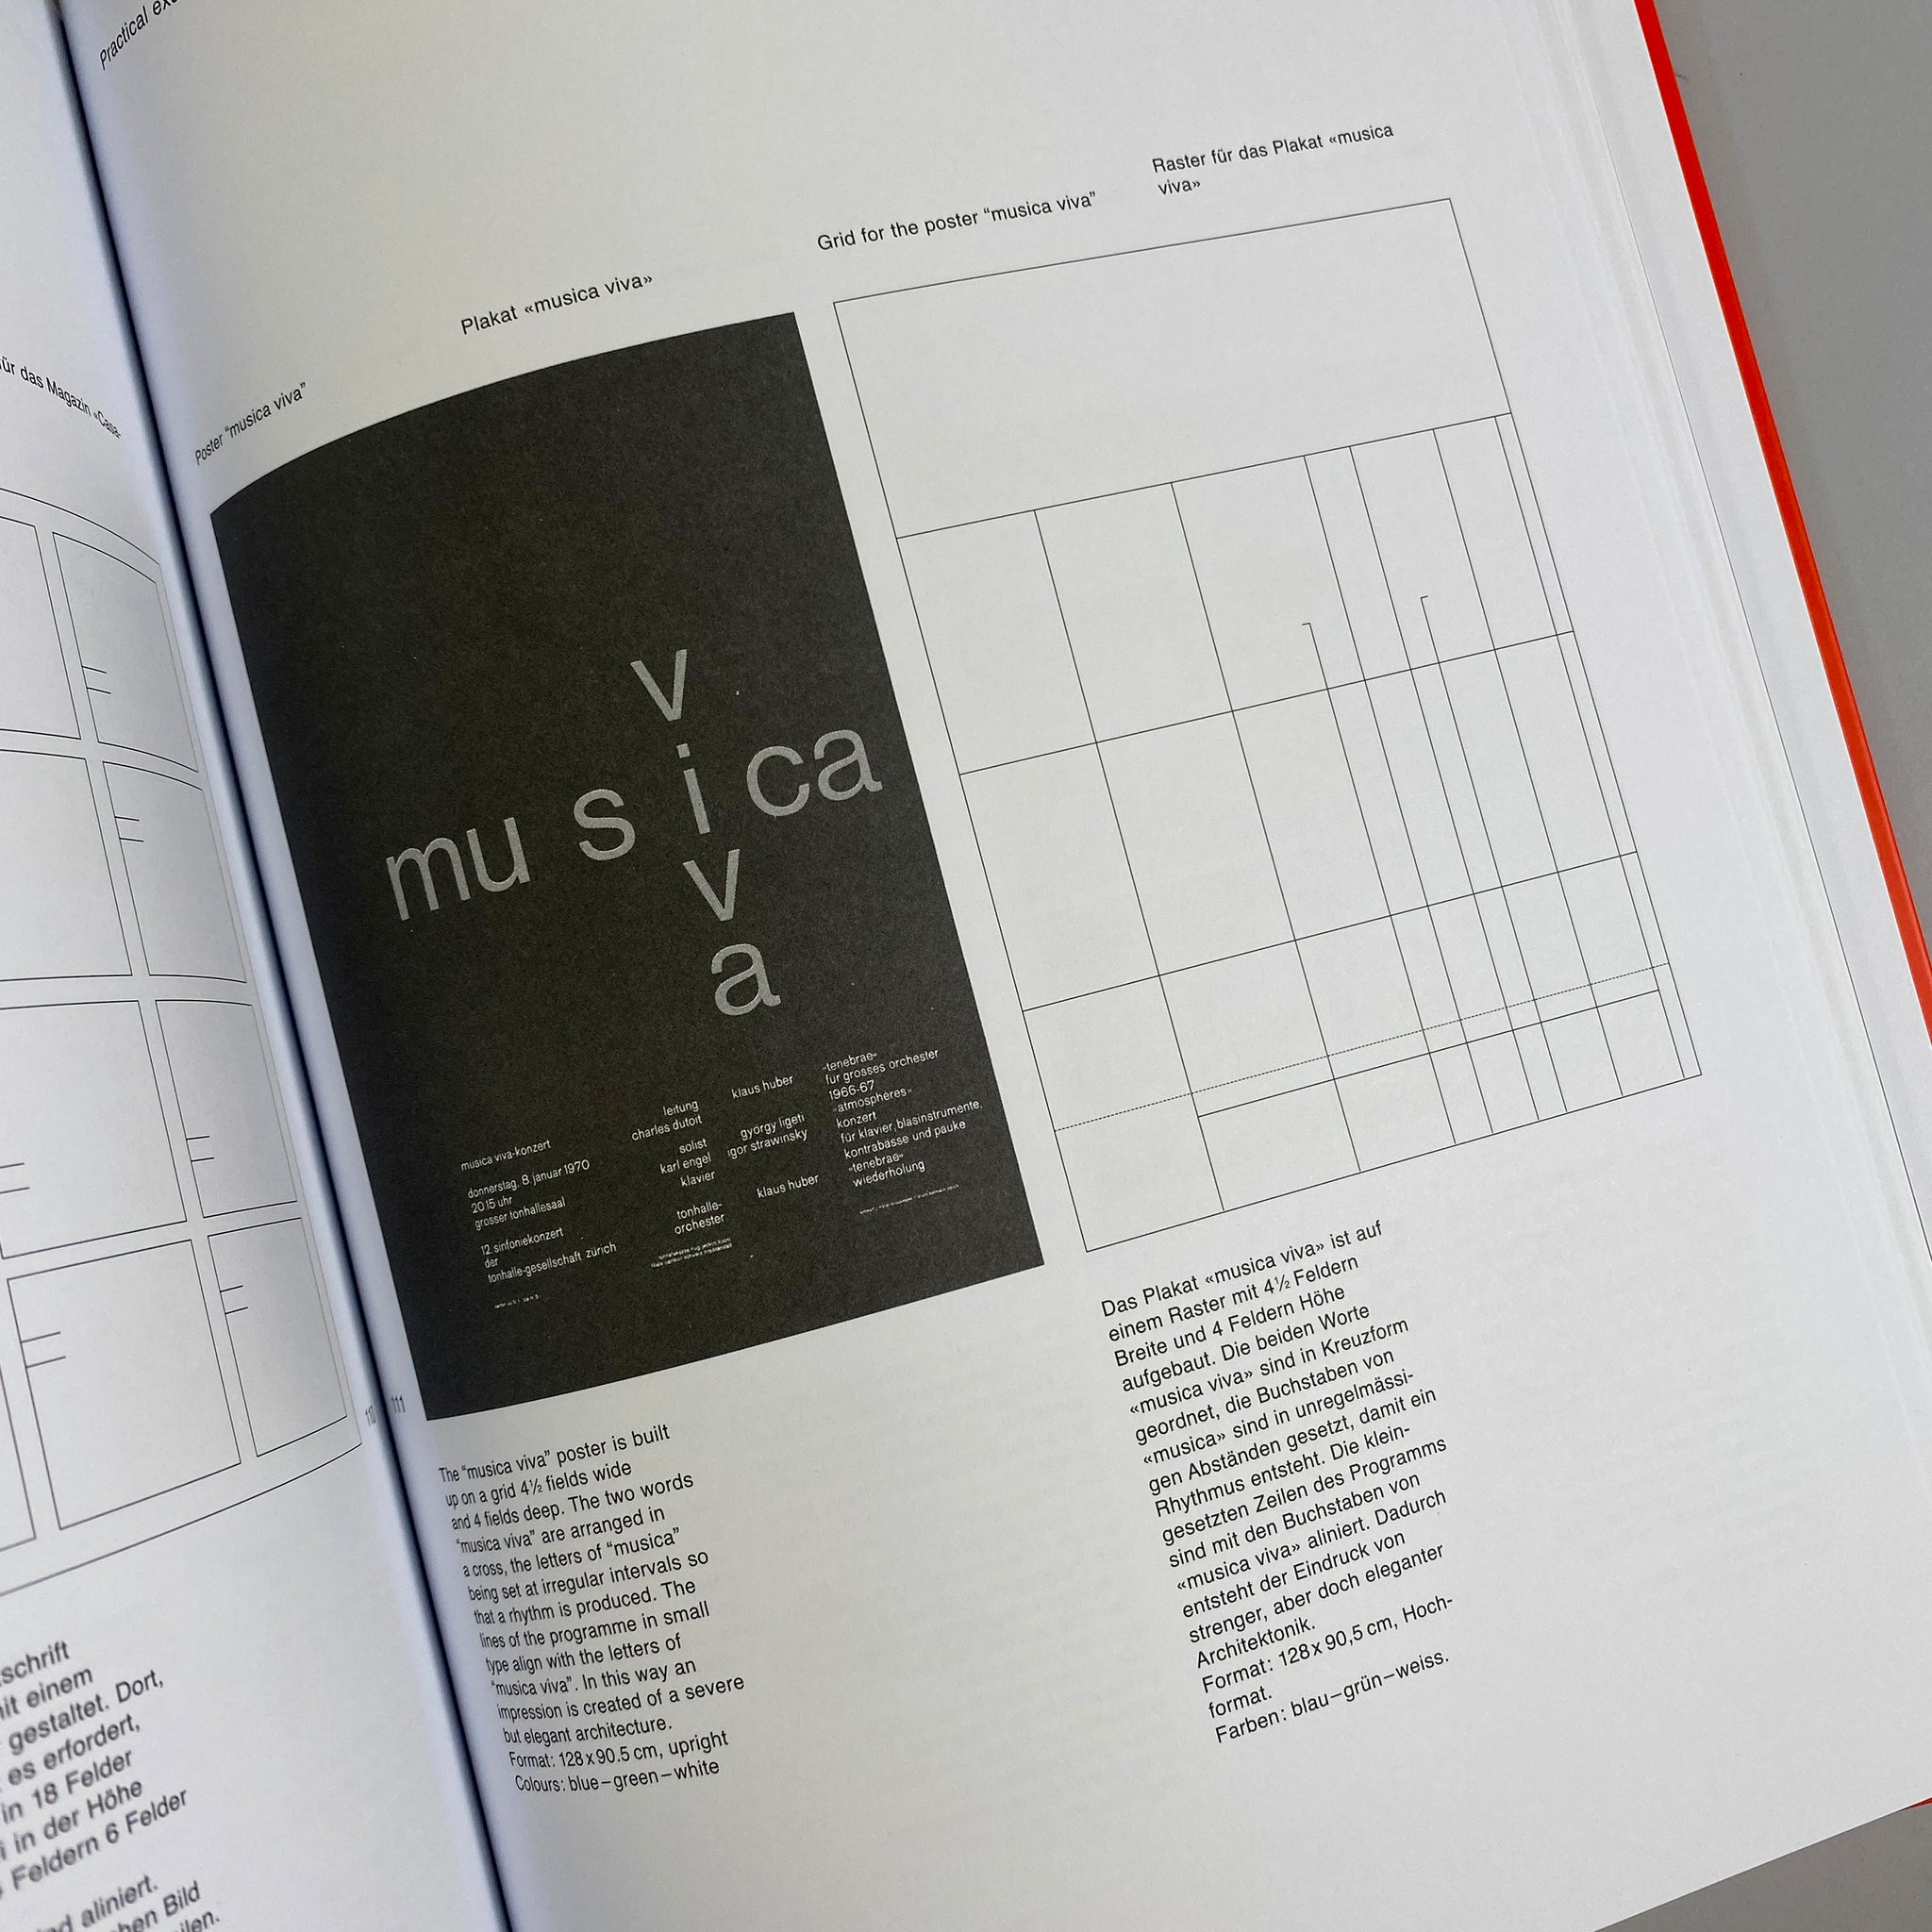 Grid Systems in Graphic Design / Josef Müller-Brockmann